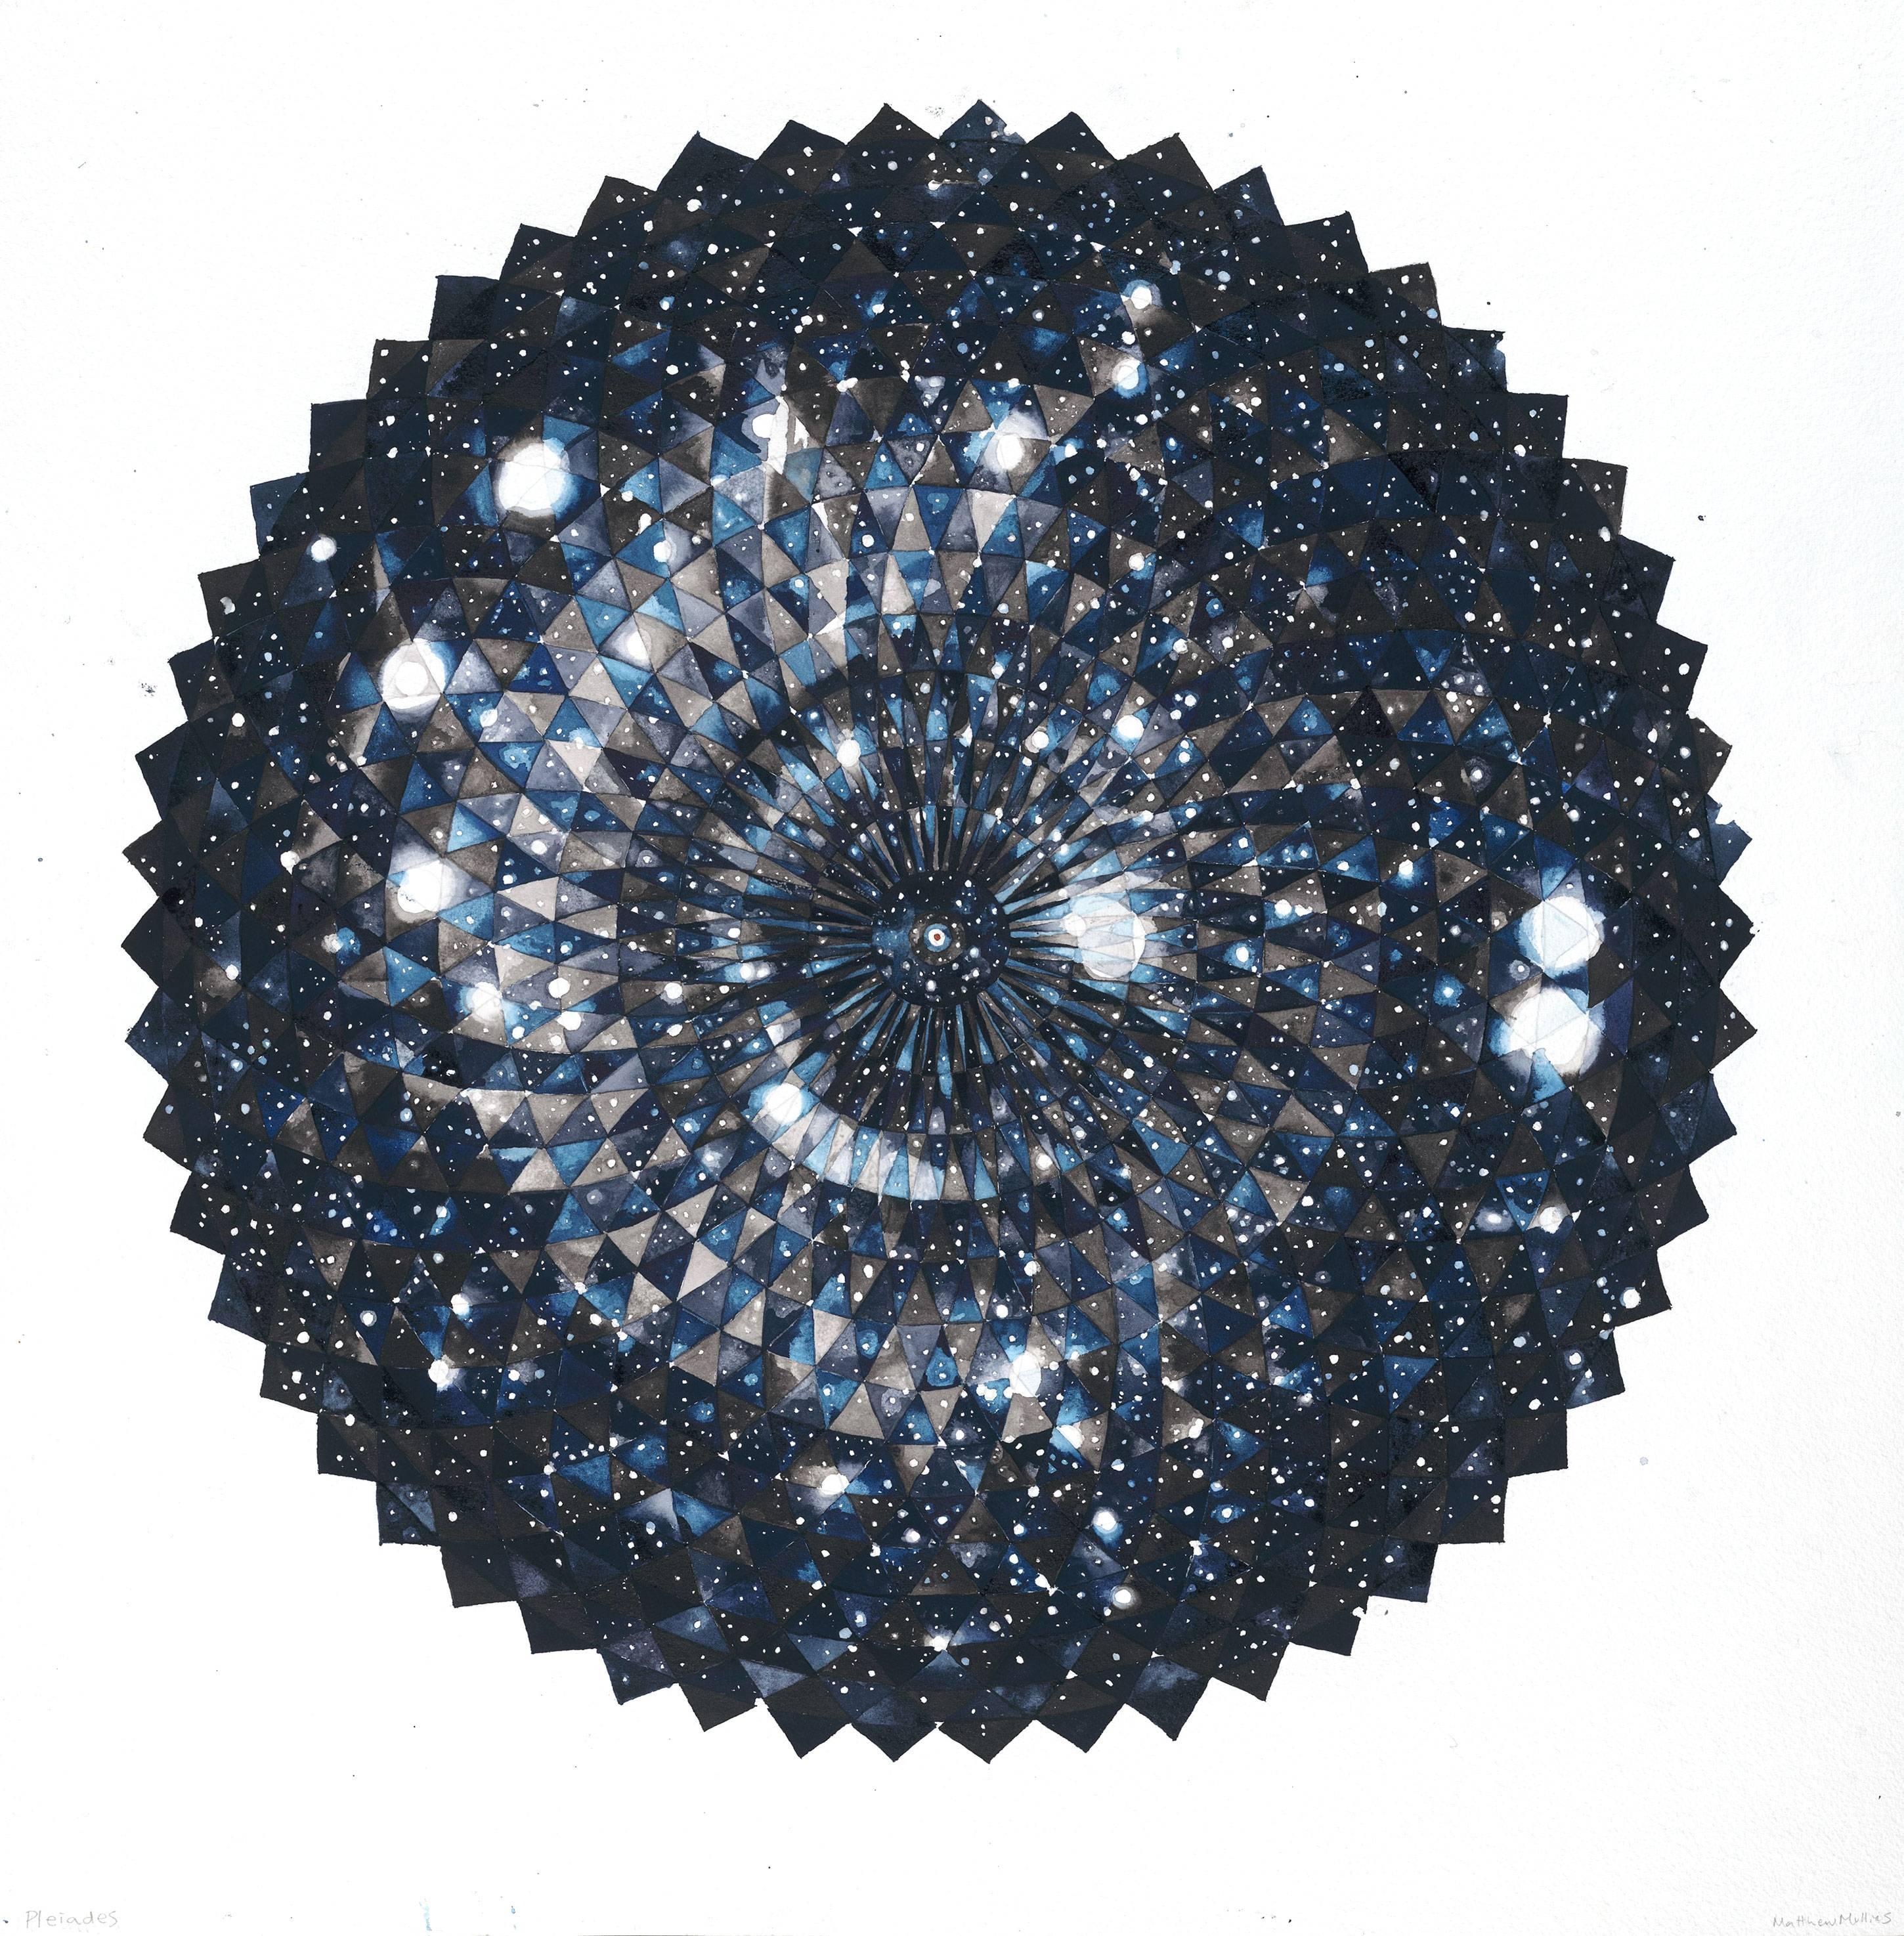 Matthew Mullins Abstract Print - Pleiades